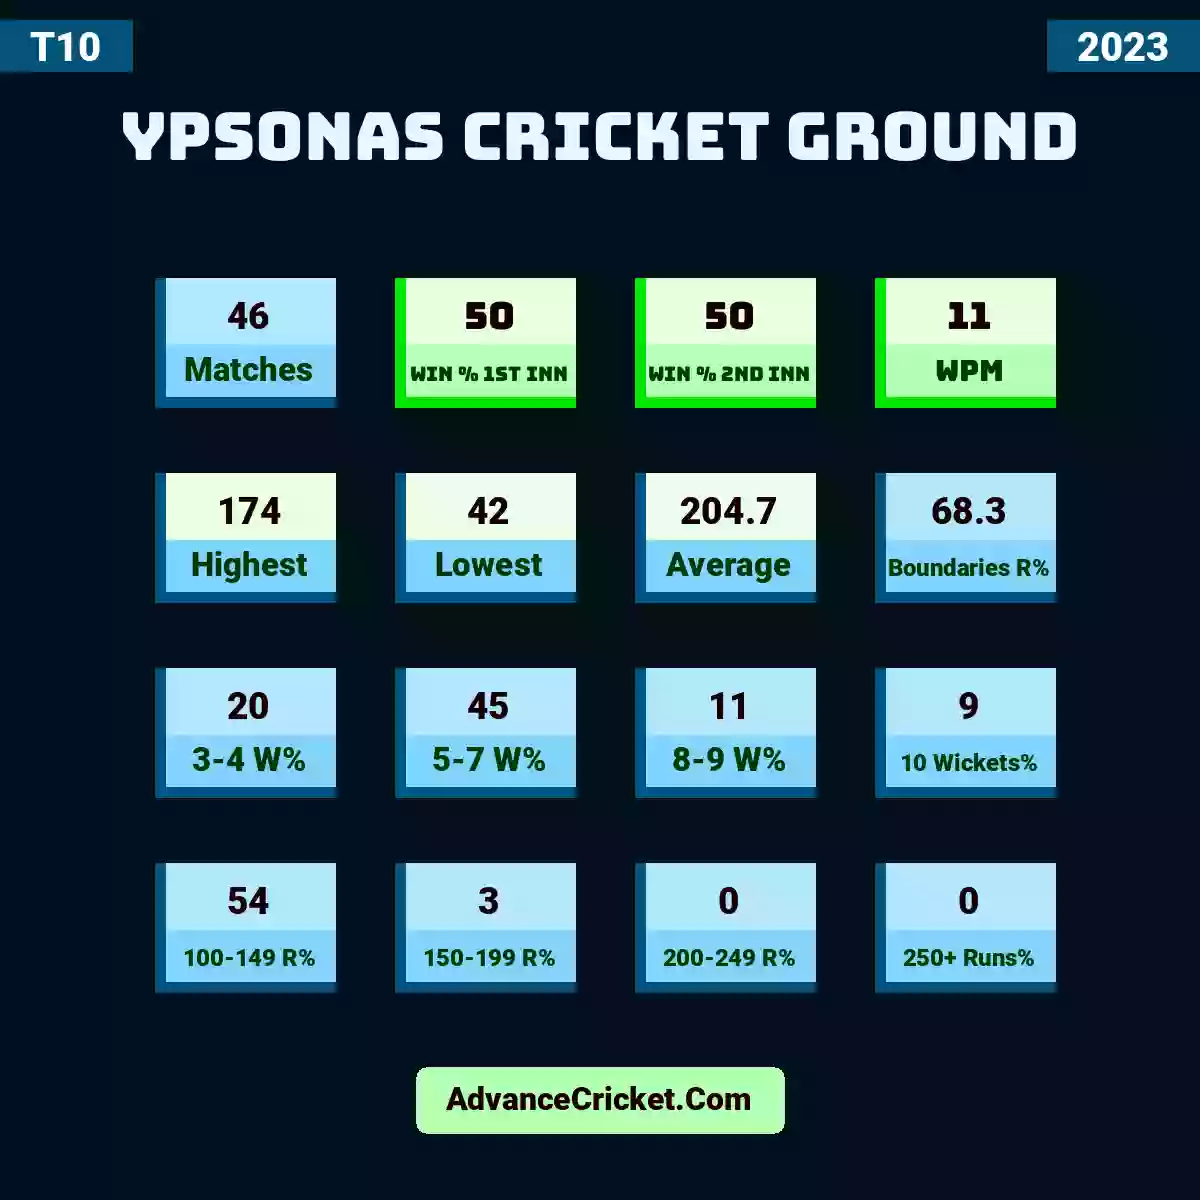 Image showing Ypsonas Cricket Ground with Matches: 46, Win % 1st Inn: 50, Win % 2nd Inn: 50, WPM: 11, Highest: 174, Lowest: 42, Average: 204.7, Boundaries R%: 68.3, 3-4 W%: 20, 5-7 W%: 45, 8-9 W%: 11, 10 Wickets%: 9, 100-149 R%: 54, 150-199 R%: 3, 200-249 R%: 0, 250+ Runs%: 0.